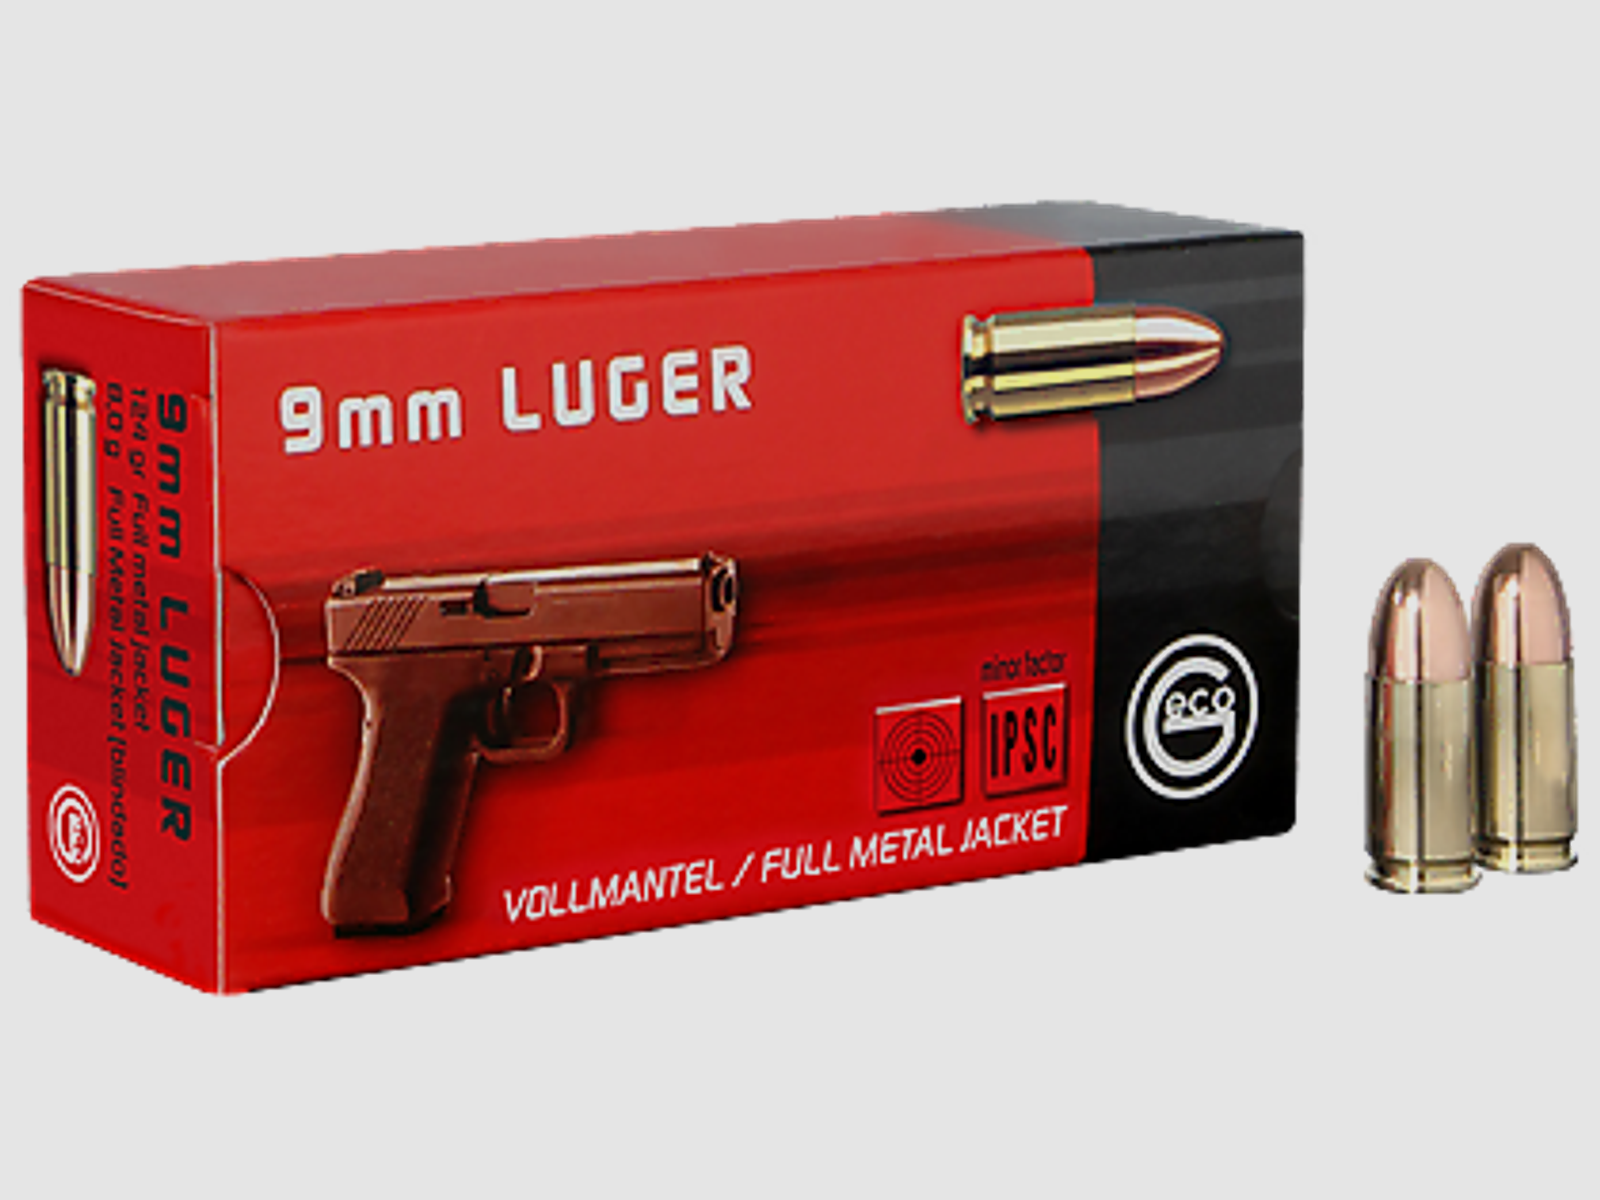 GECO Pistolenmunition 9mmLuger VM 124grs/8,0g 50 Stk SONDERPREIS ab 0,25/Stk